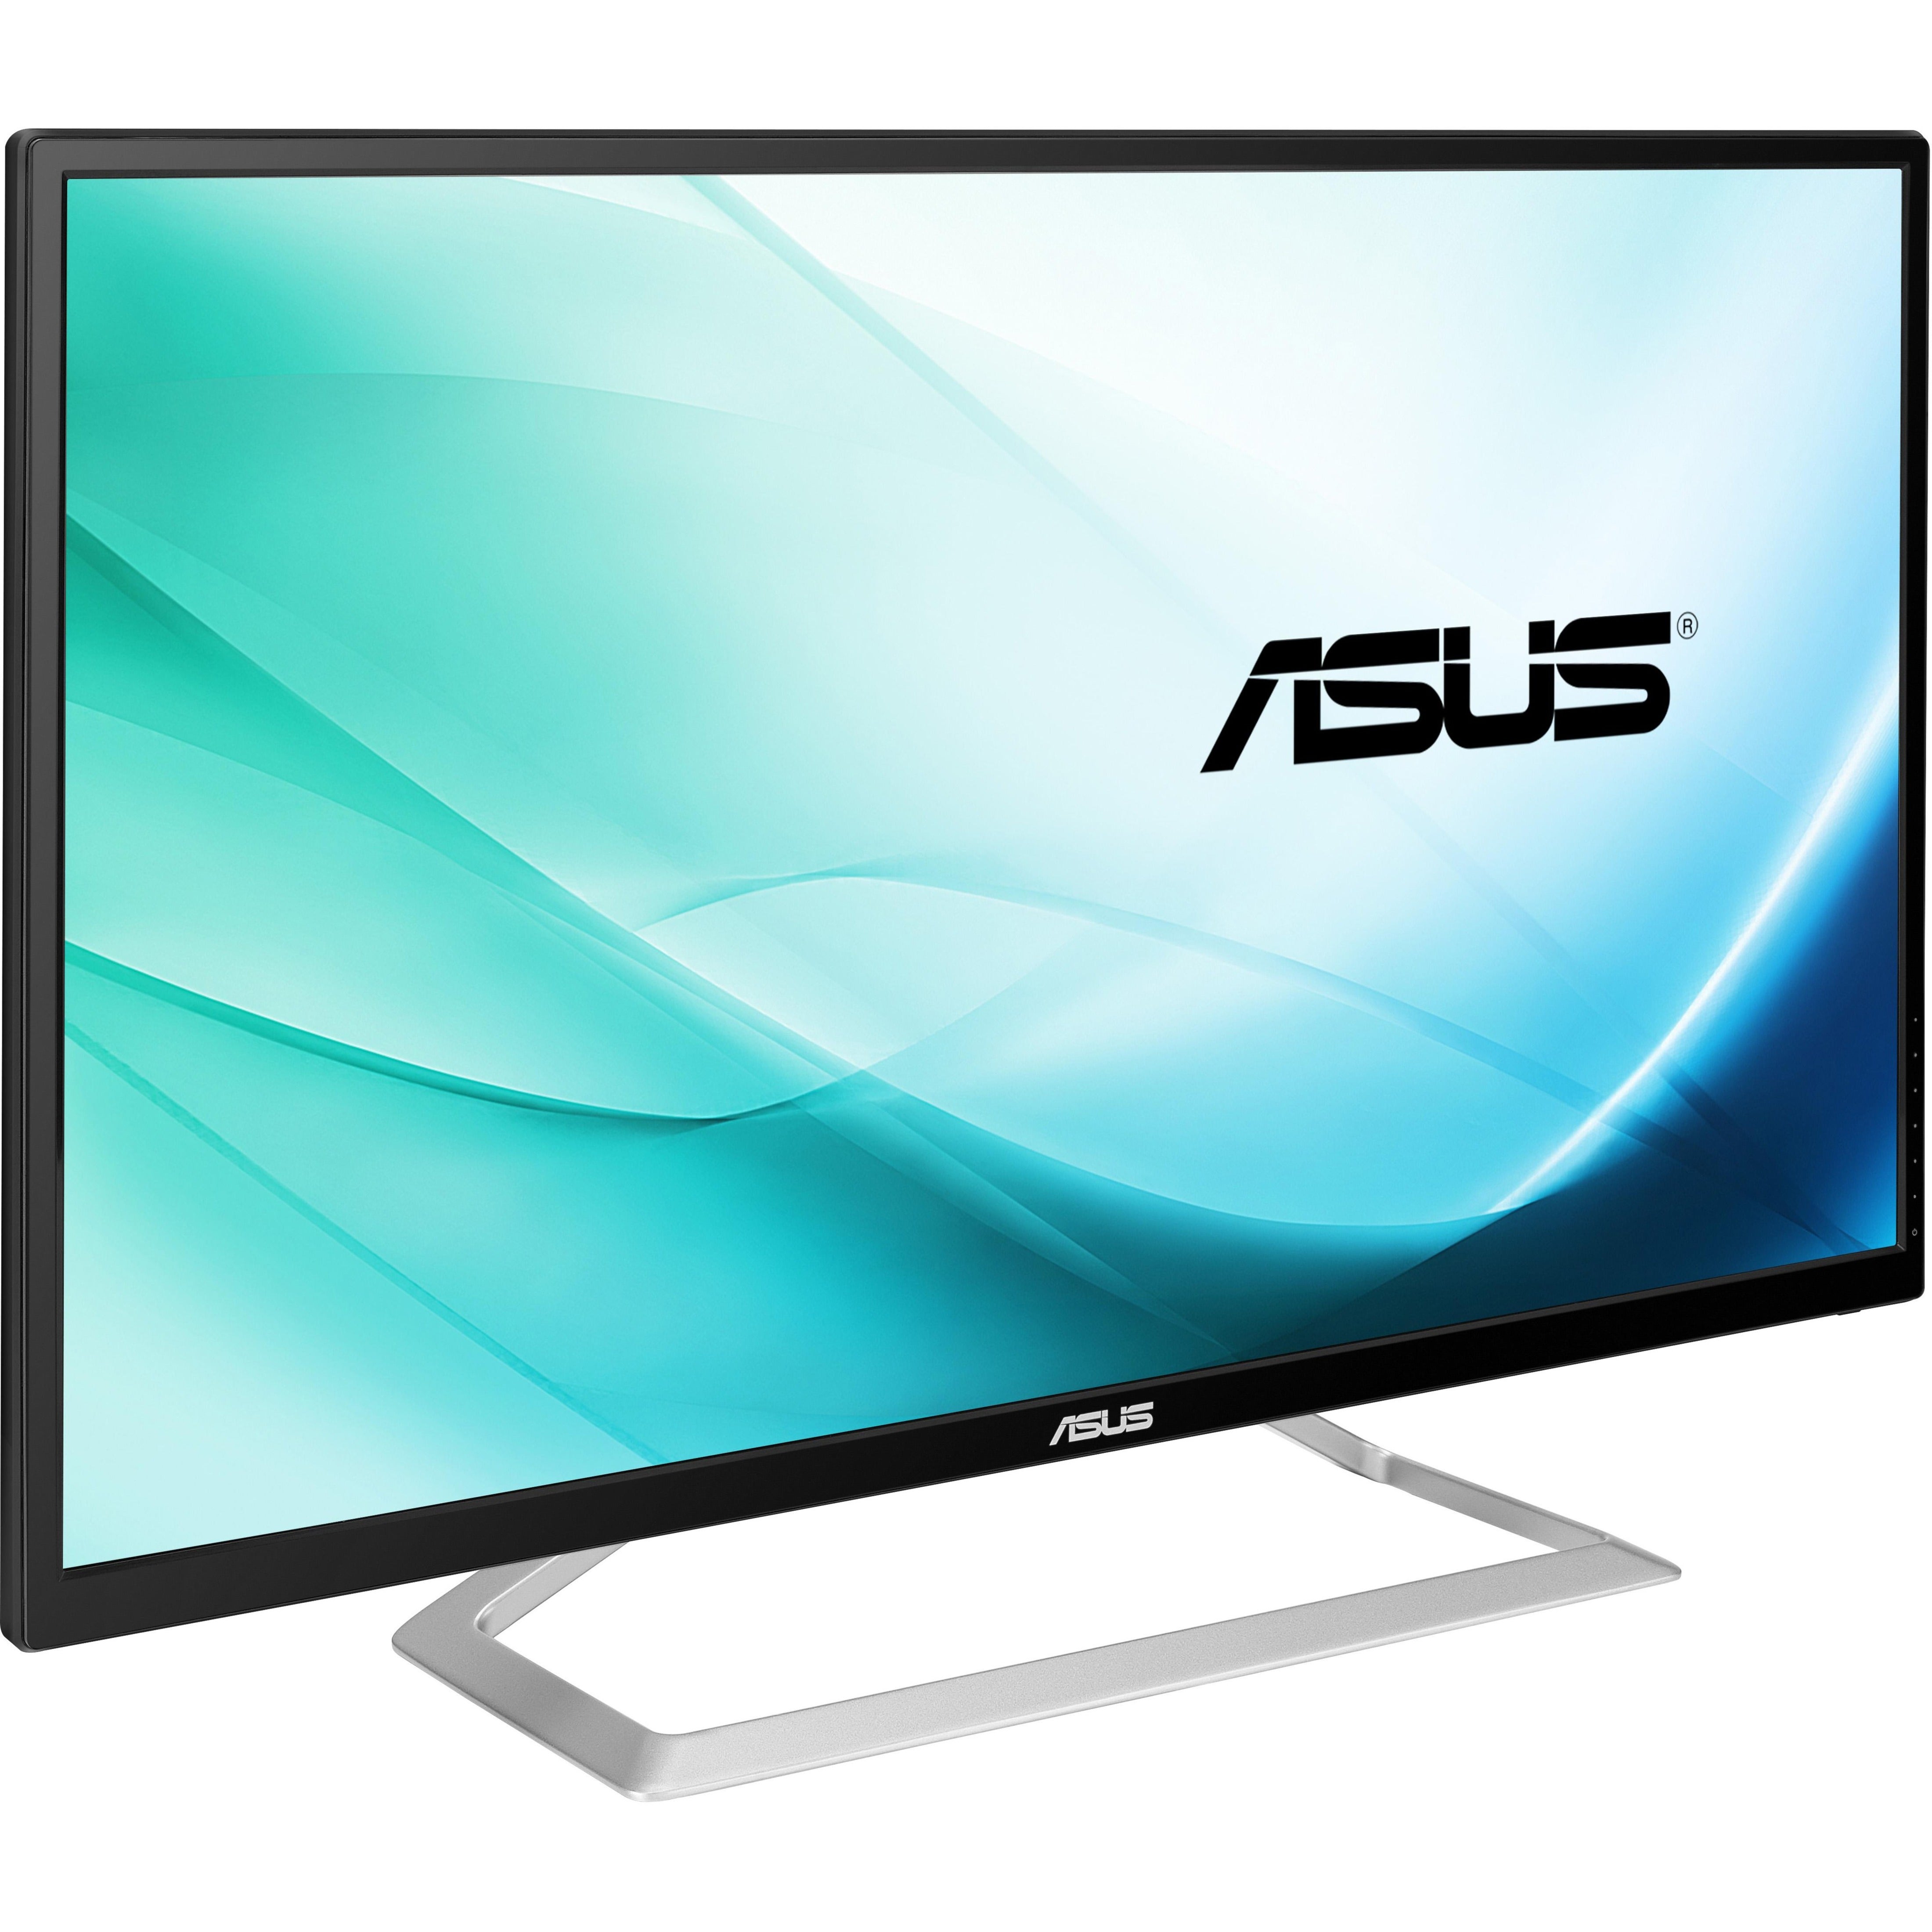 Asus VA325H Widescreen LCD Monitor, 31.5 Full HD, 16:9, 250 Nit Brightness, 100,000,000:1 Contrast Ratio